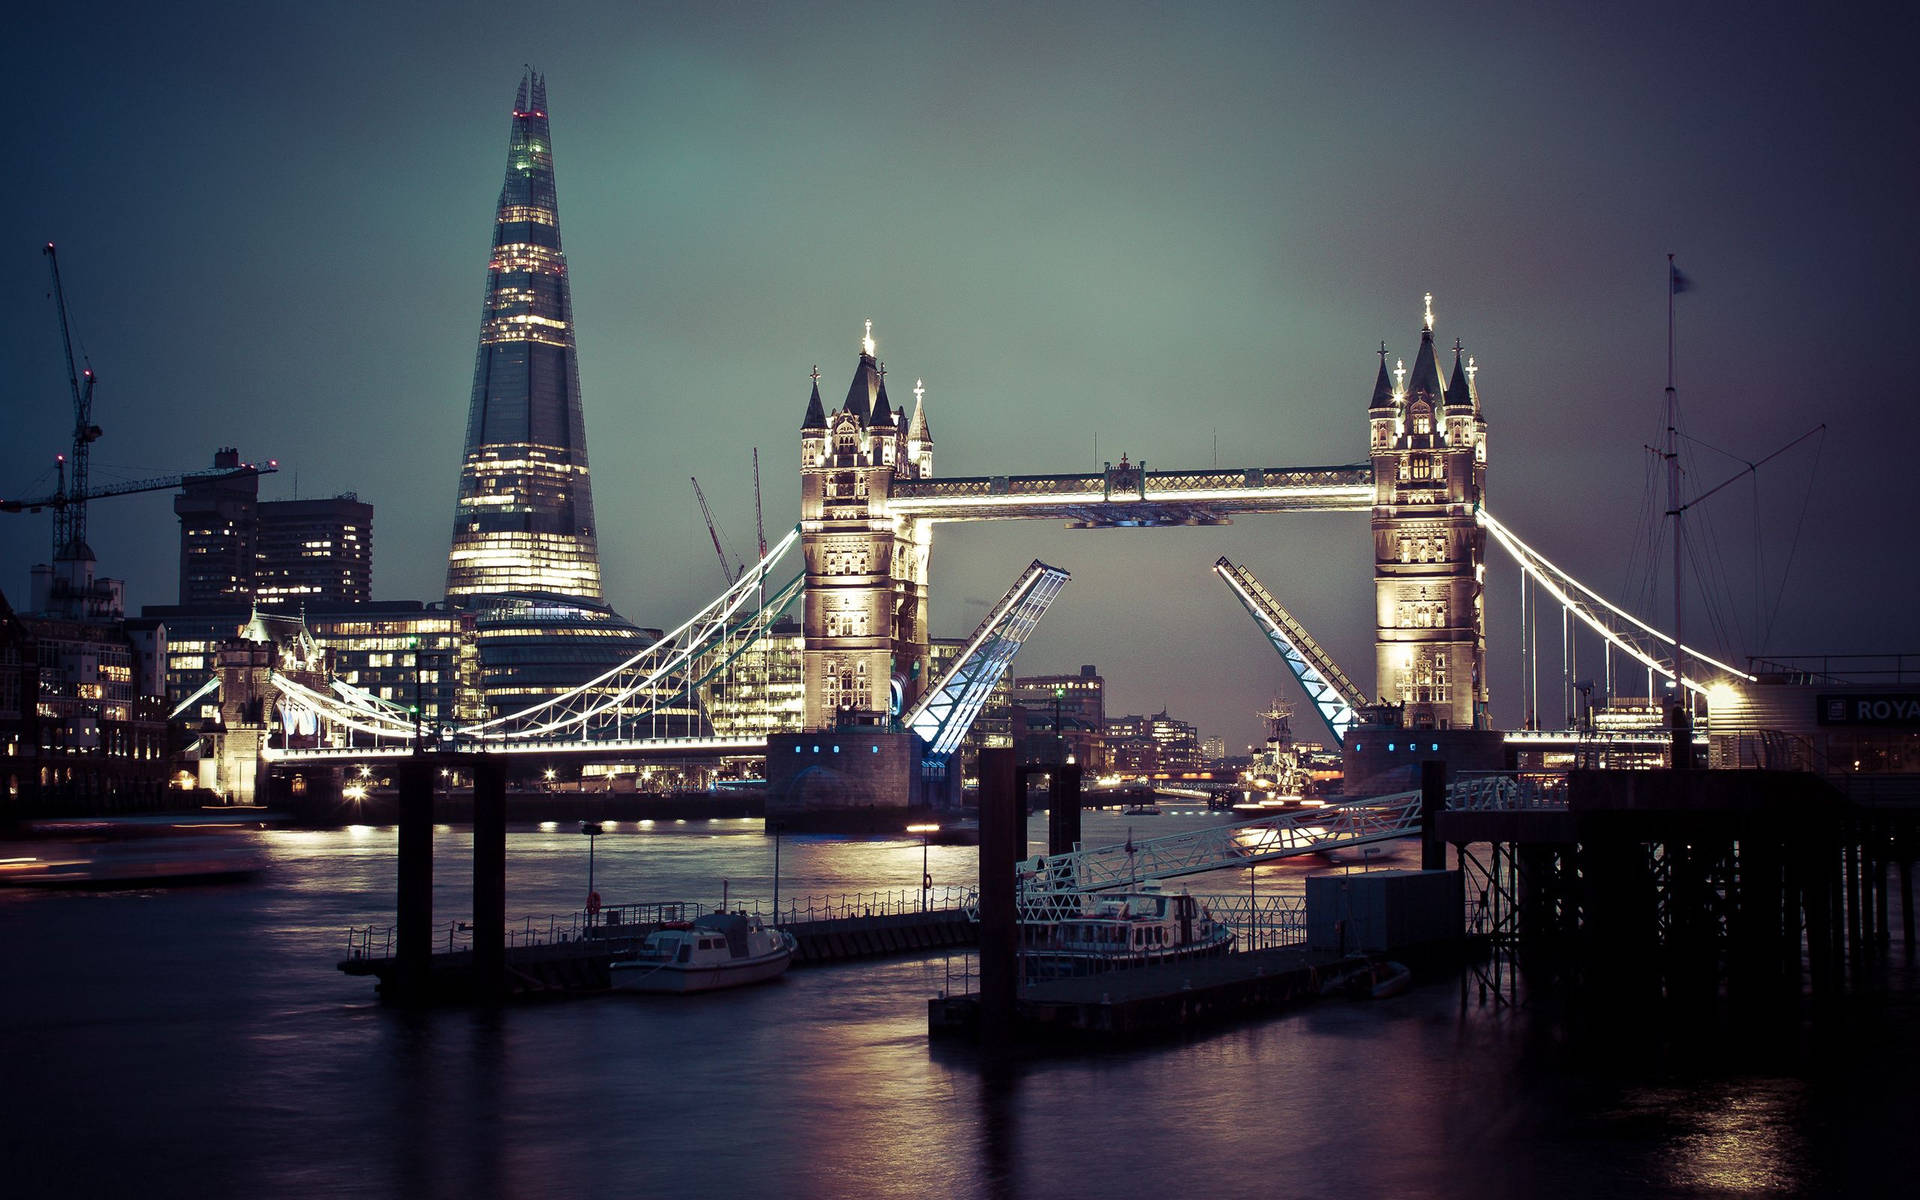 London Bridge At Night